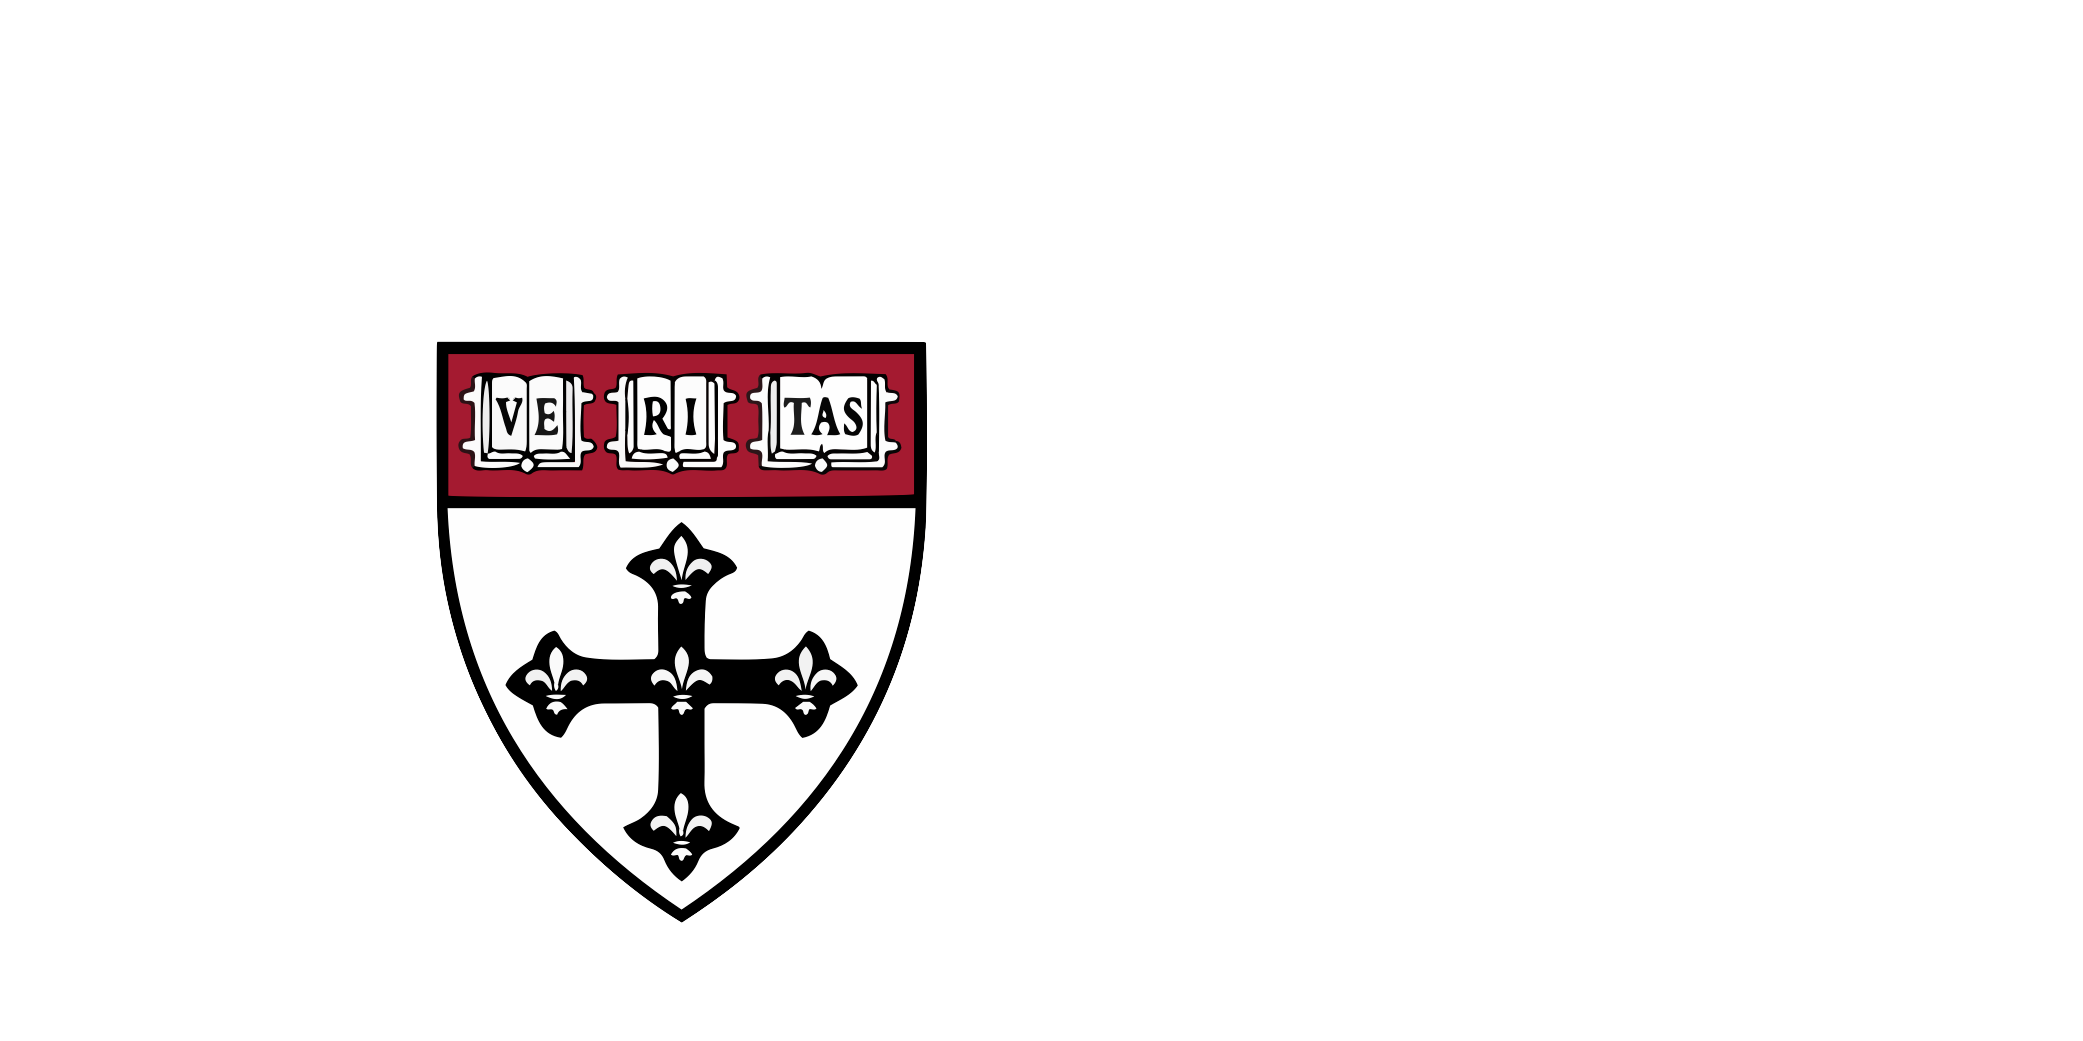 harvard school of public health logo